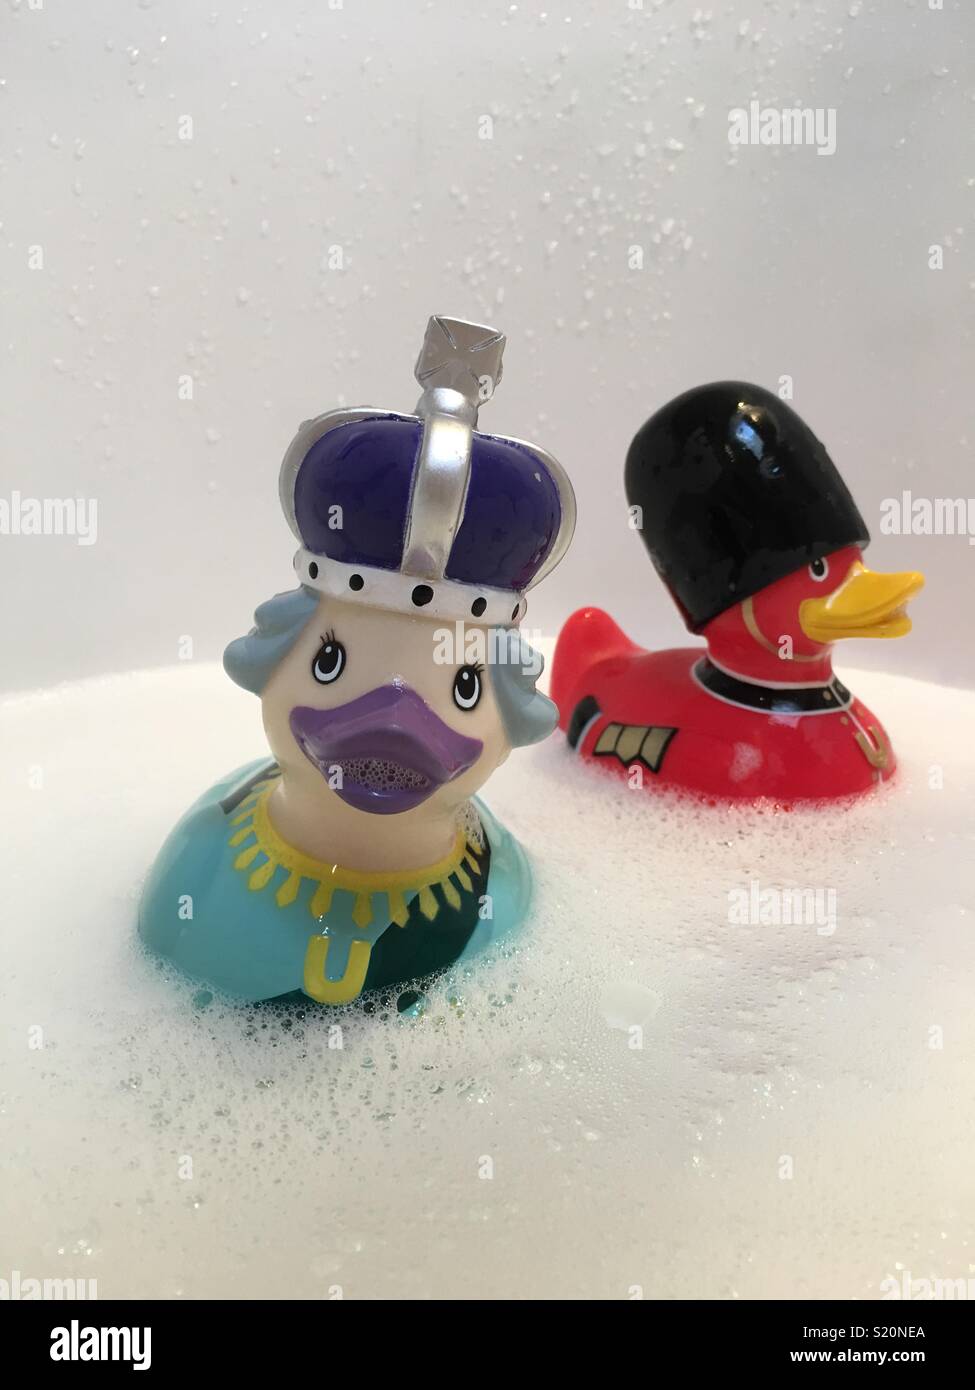 Queen Elizabeth and Queen’s Guard rubber duckies in a bathtub Stock Photo